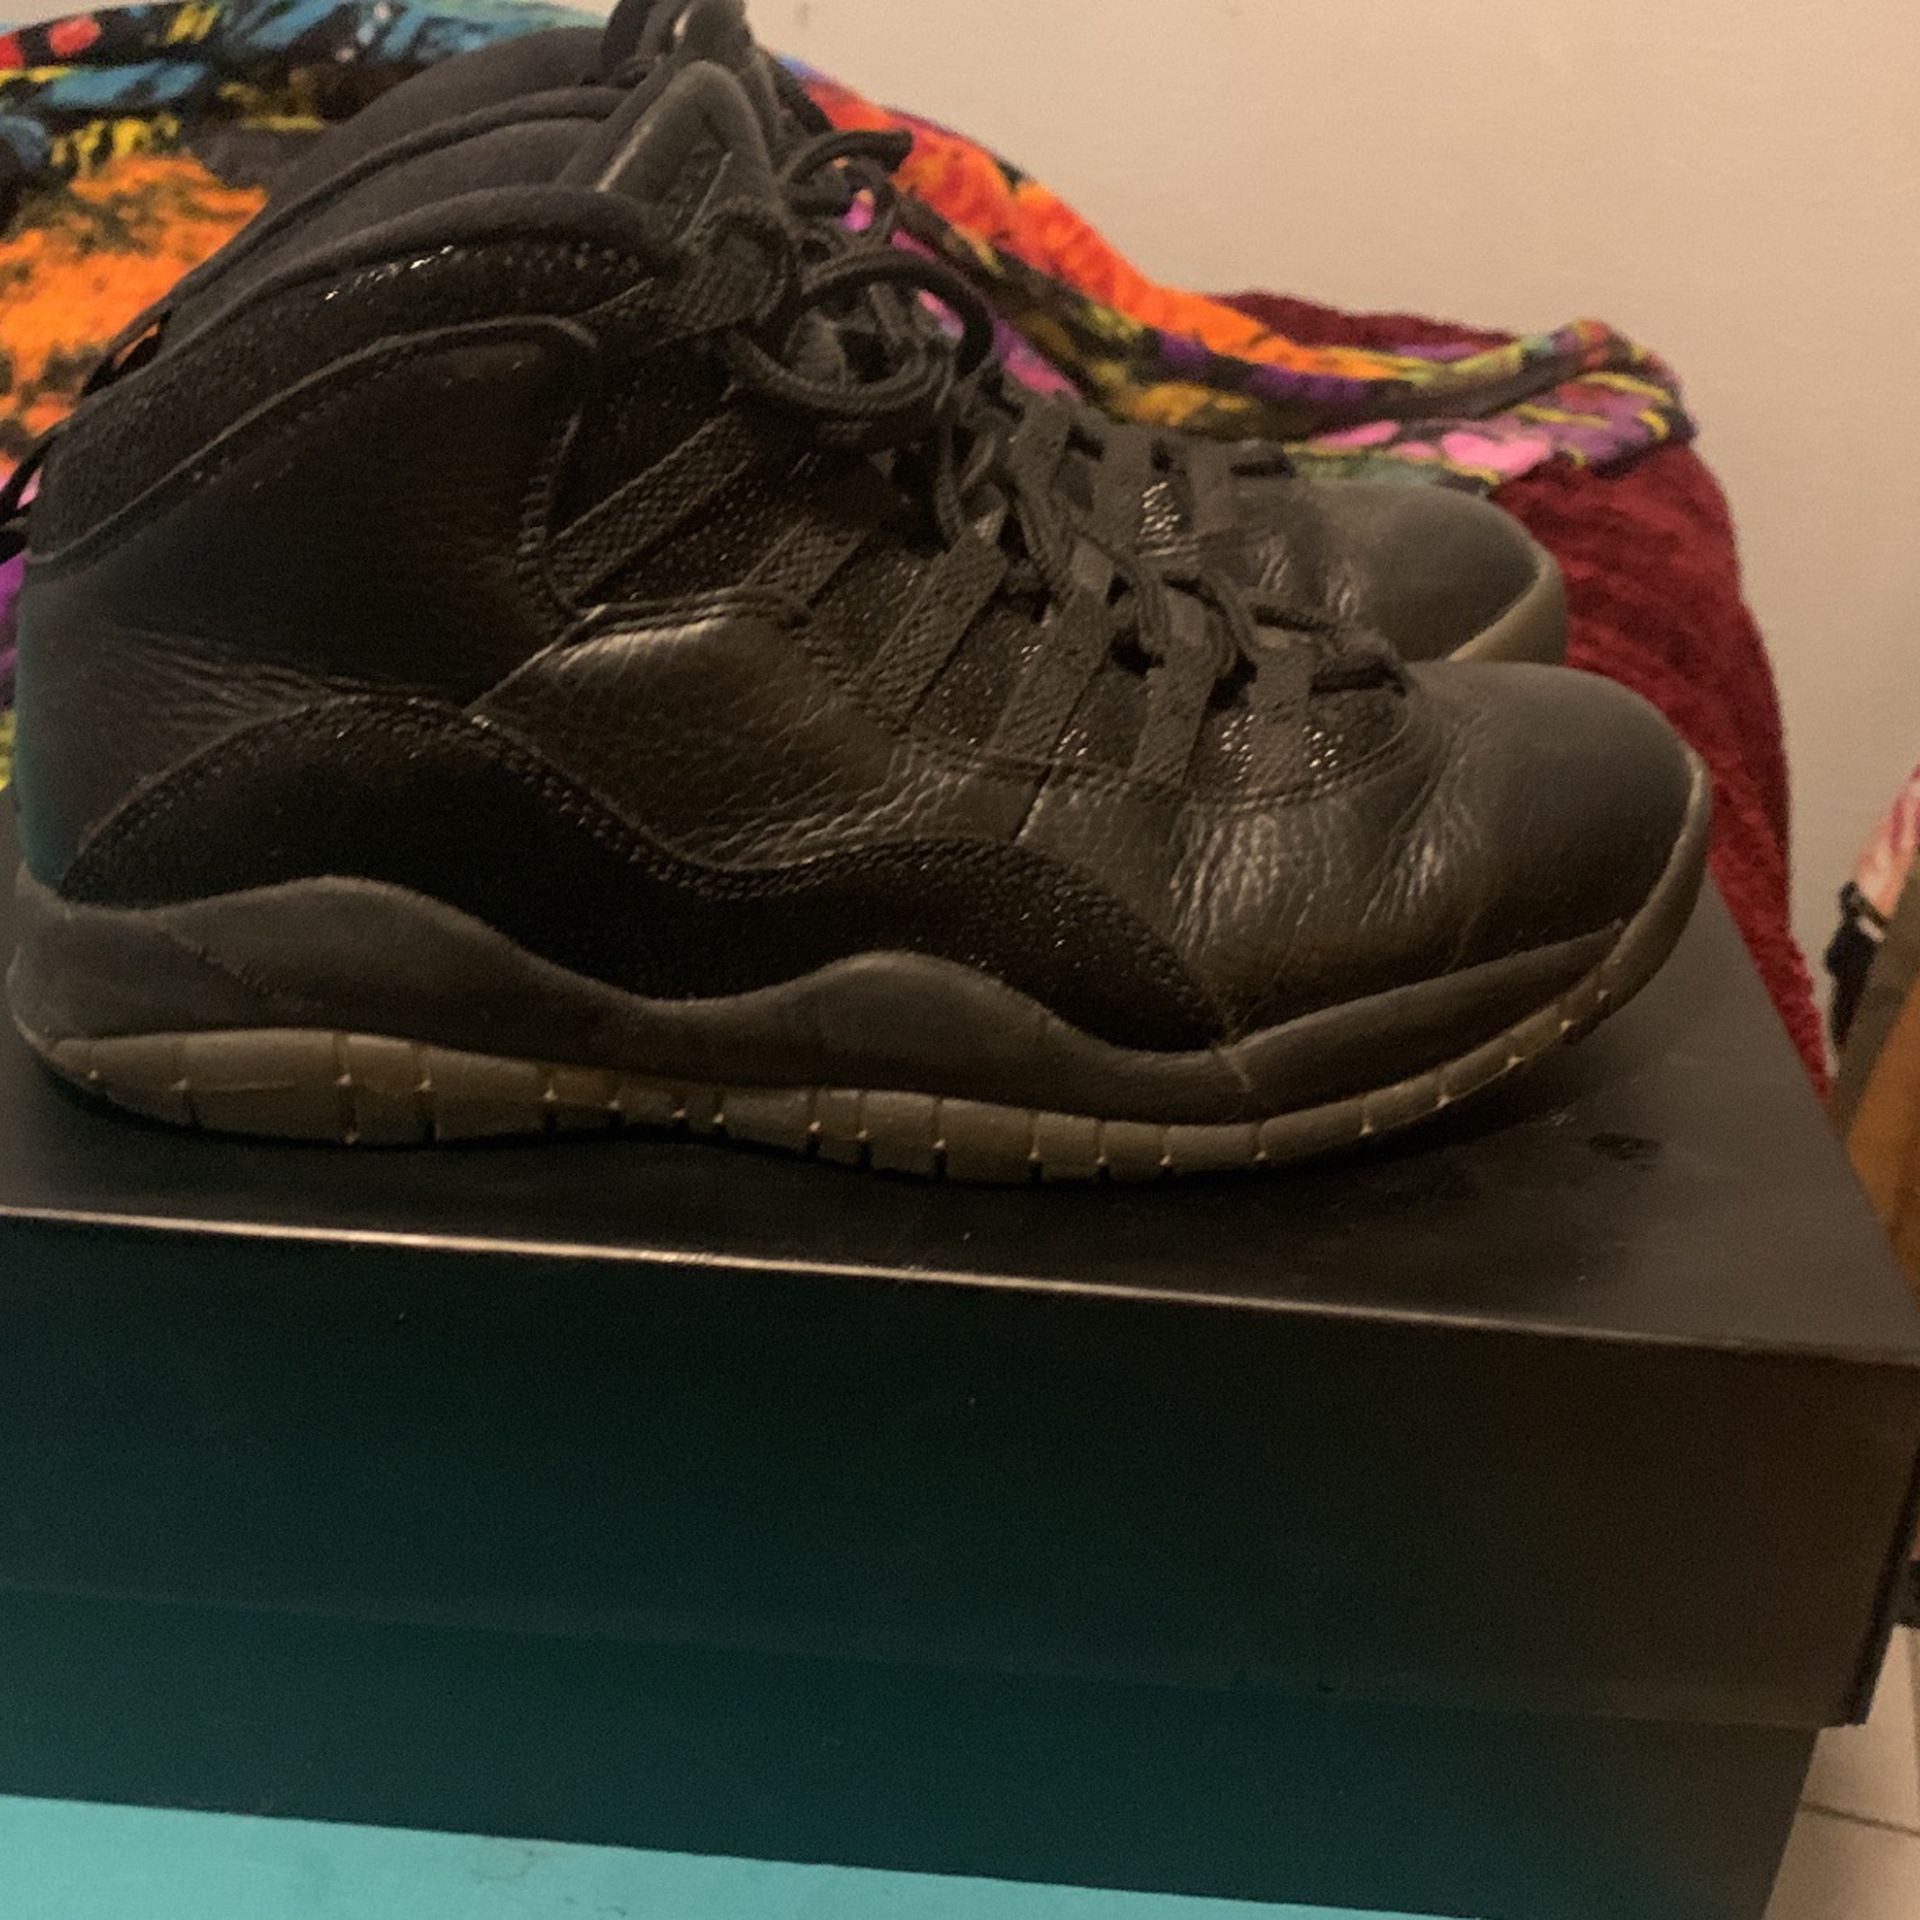 Jordan 10 Black OVO Size 9.5